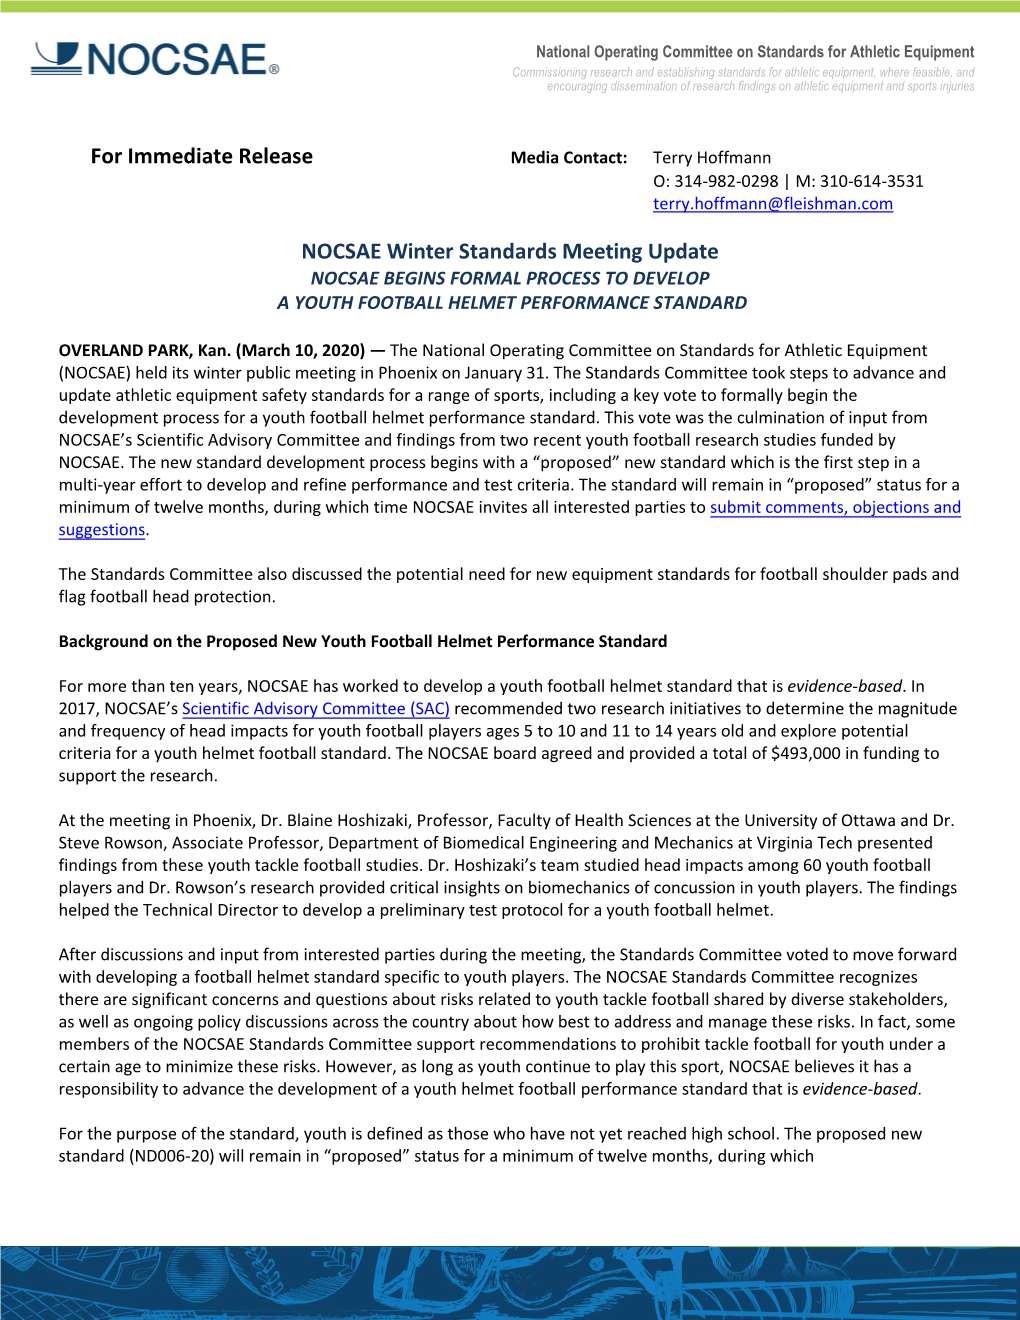 For Immediate Release NOCSAE Winter Standards Meeting Update